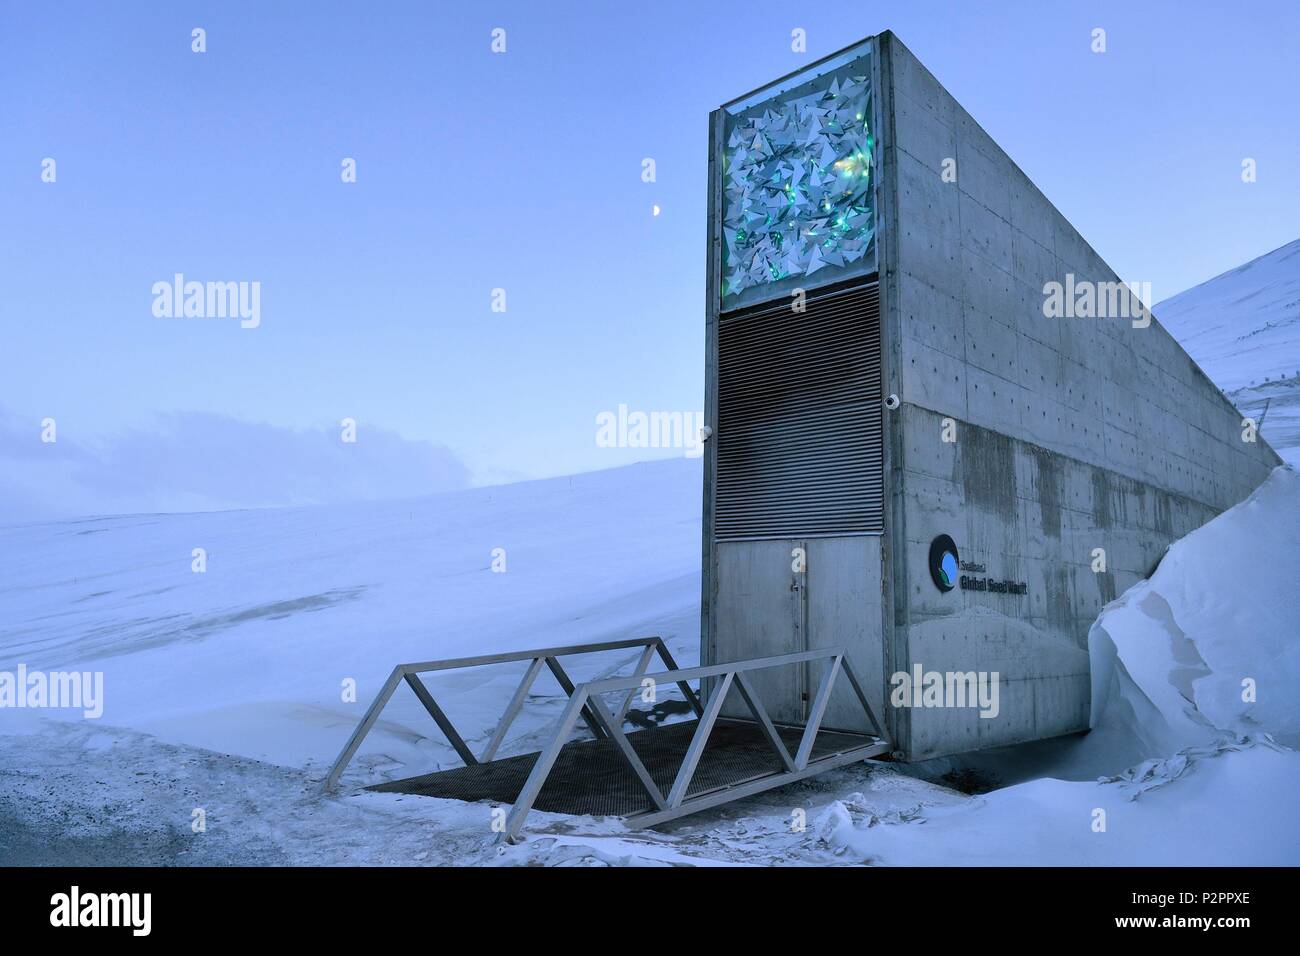 Norvegia Isole Svalbard, Spitzbergen, Longyearbyen, Svalbard Global Seed Vault (Banca del seme) fornisce una sicurezza di back-up per gli attuali genebank collezioni Foto Stock